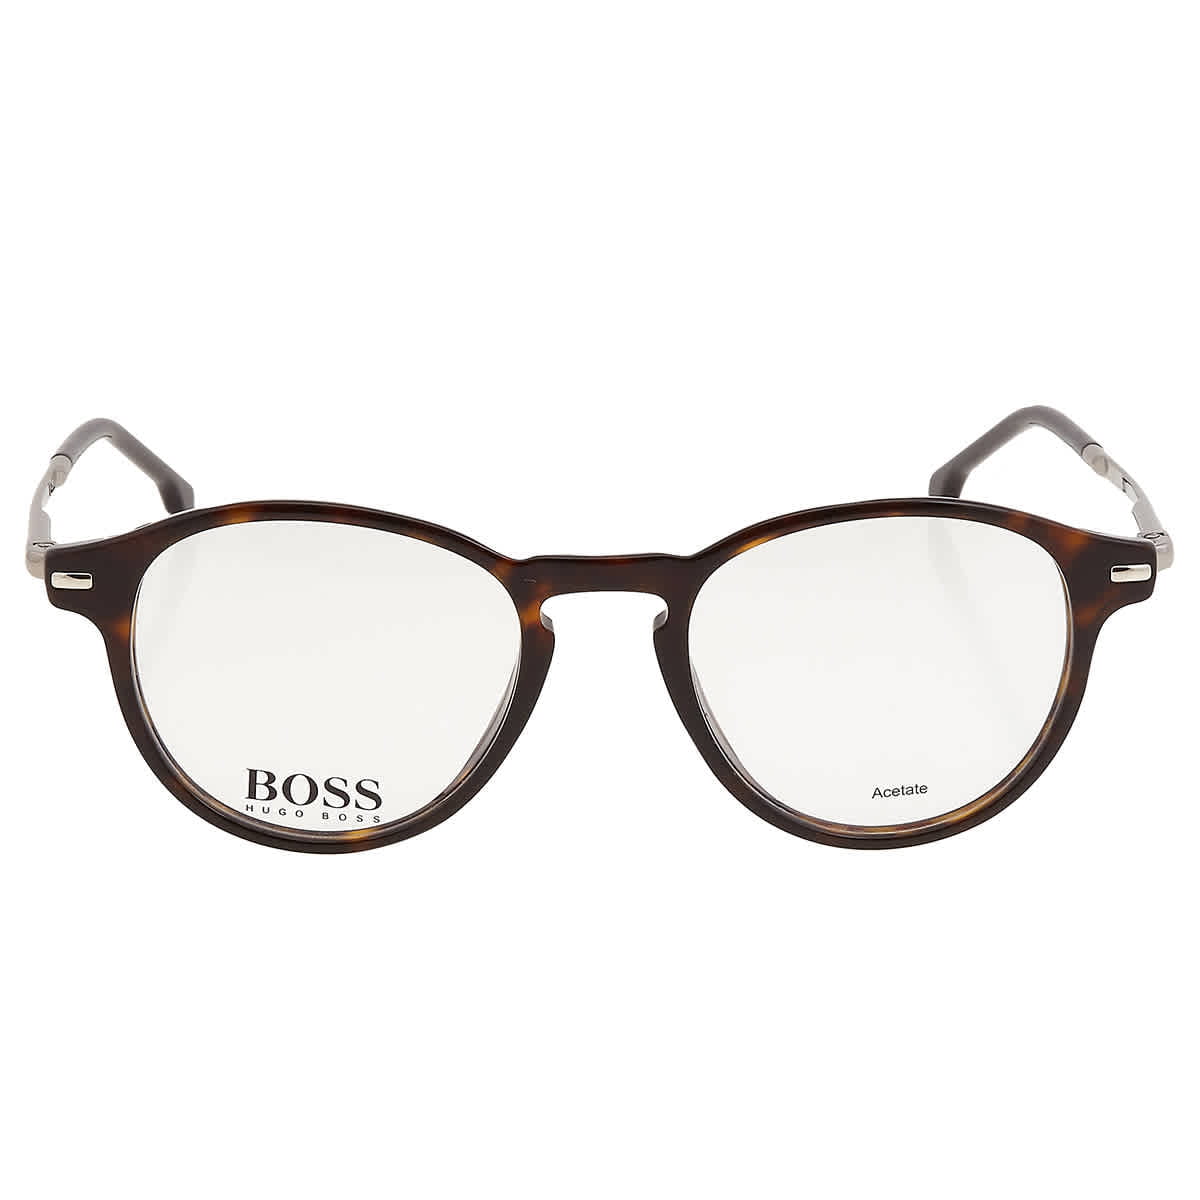 Hugo Boss Demo Phantos Men's Eyeglasses BOSS 0932 0086 48 - Walmart.com